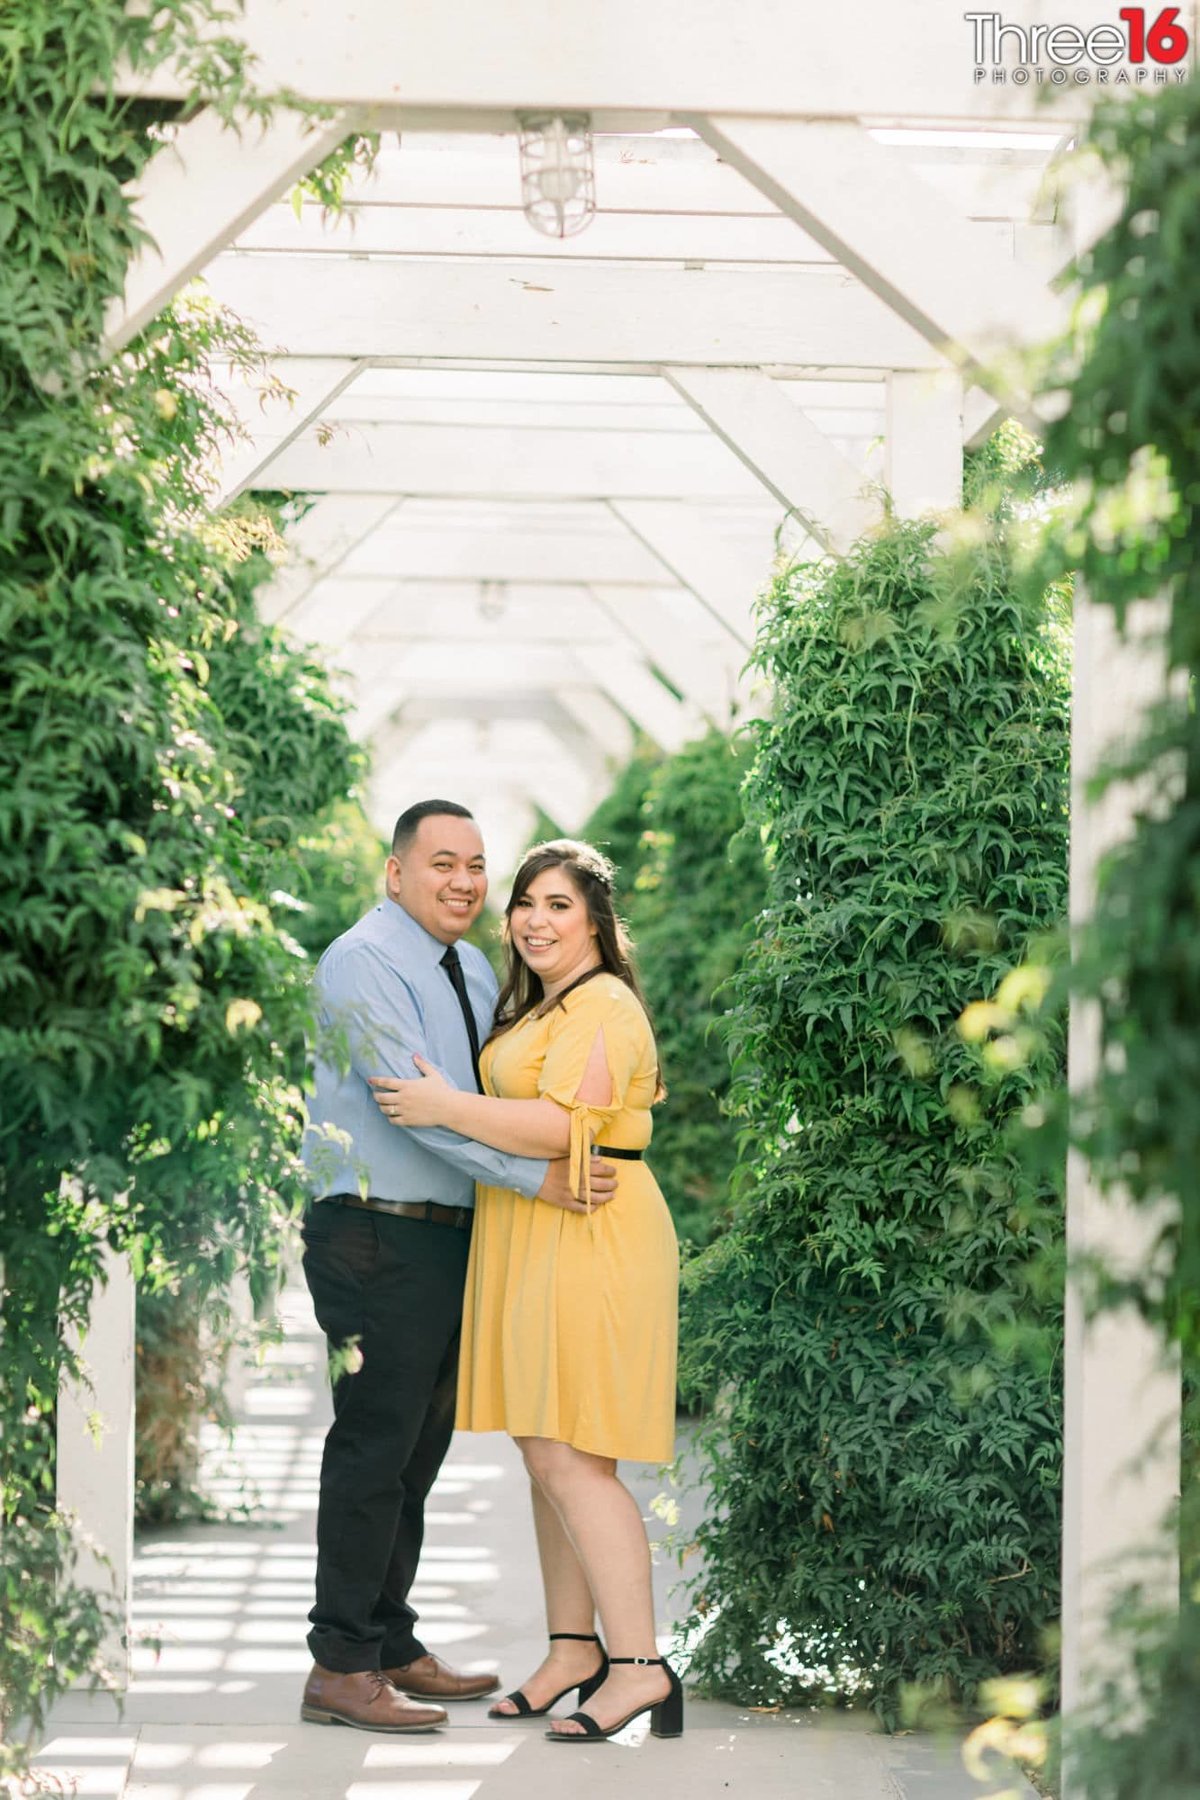 Engaged couple embrace amongst the shrubs during photo session